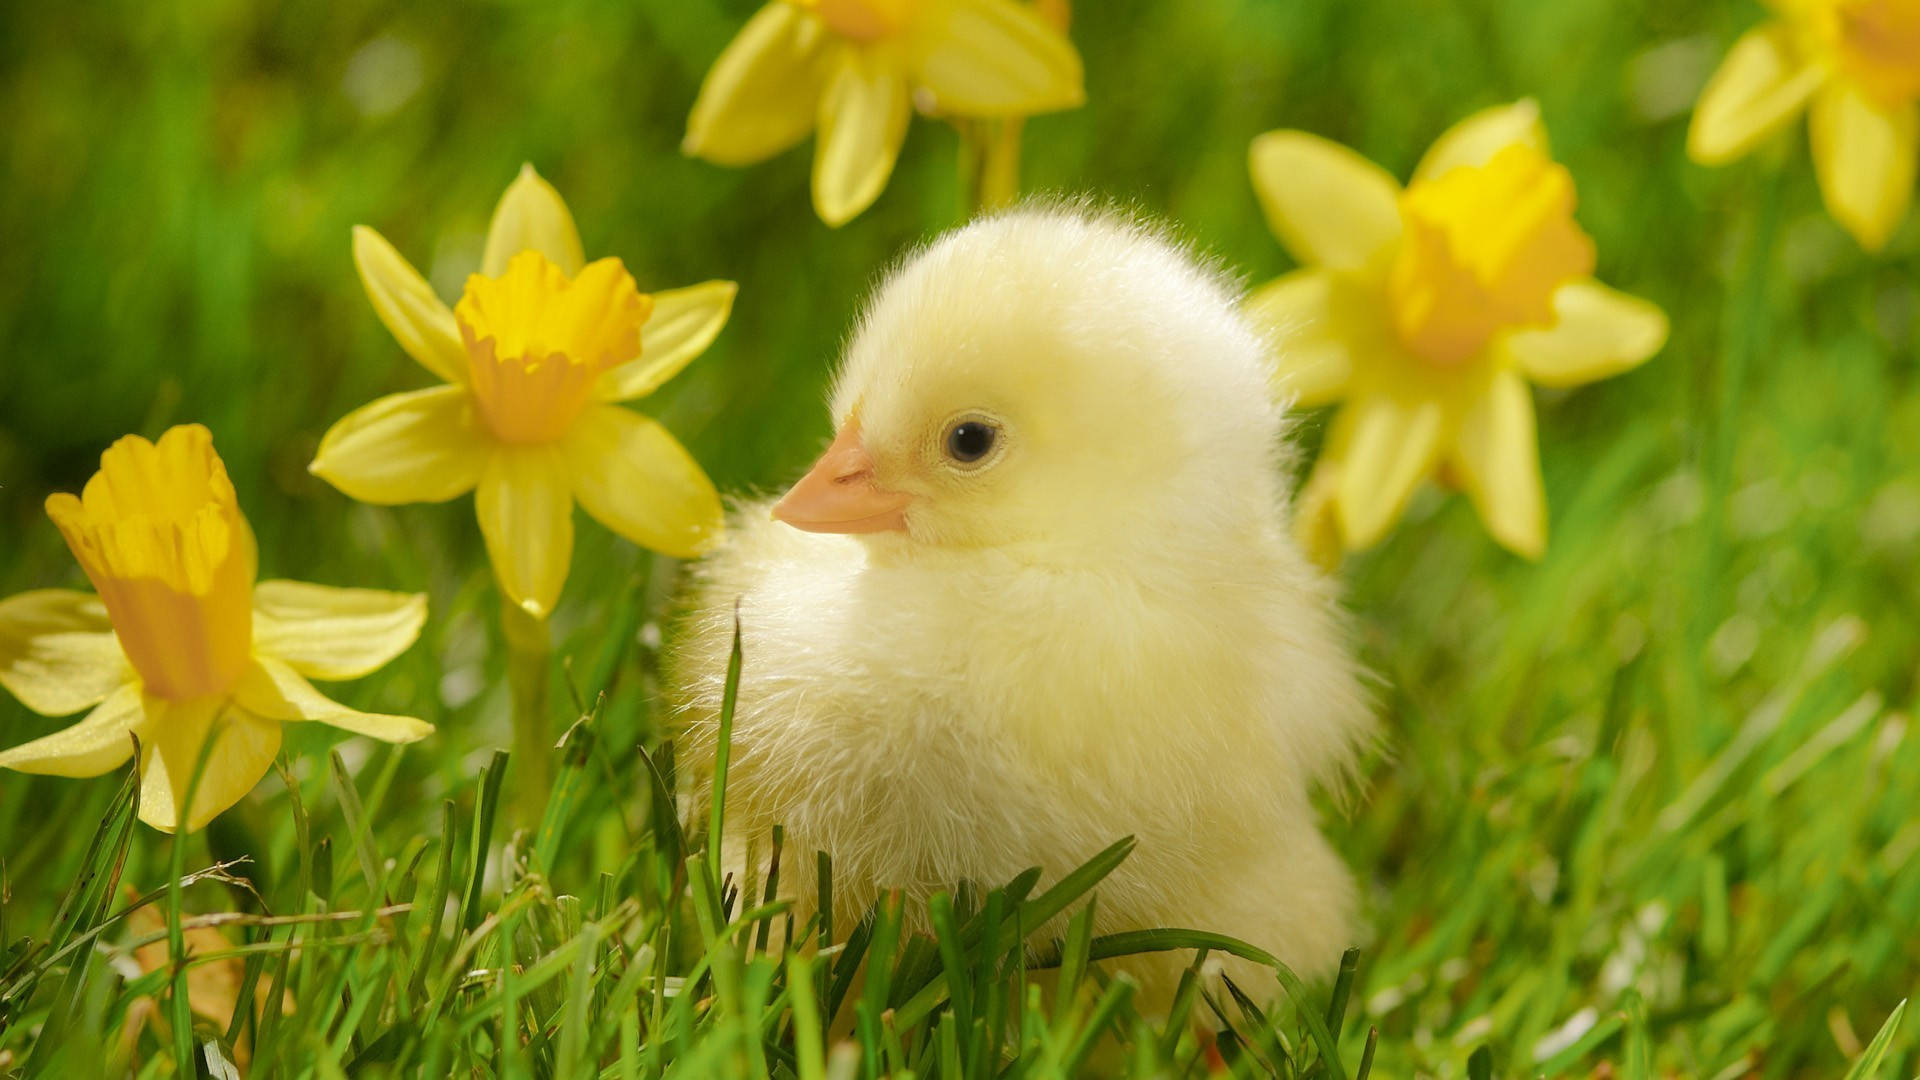 Cute Spring Chick Wallpaper